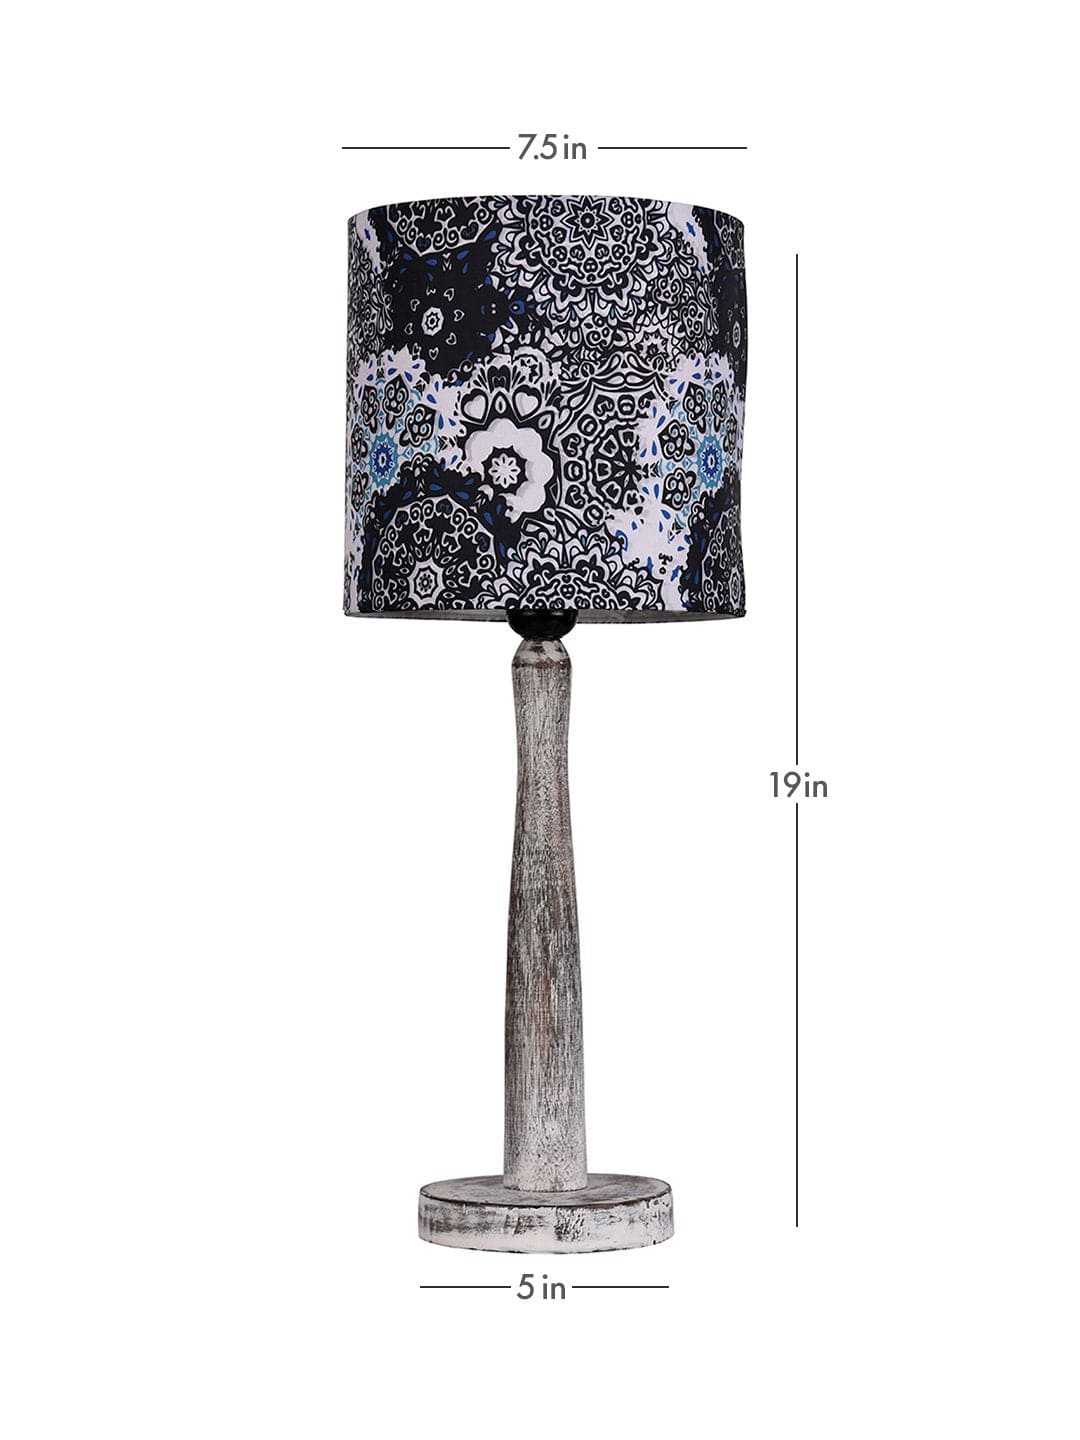 Distress White Wooden Lamp with Blue Batik Print Shade